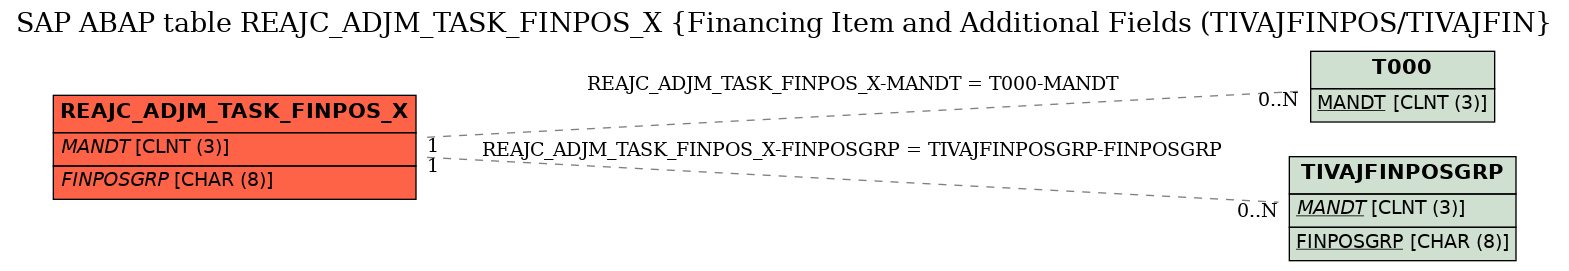 E-R Diagram for table REAJC_ADJM_TASK_FINPOS_X (Financing Item and Additional Fields (TIVAJFINPOS/TIVAJFIN)